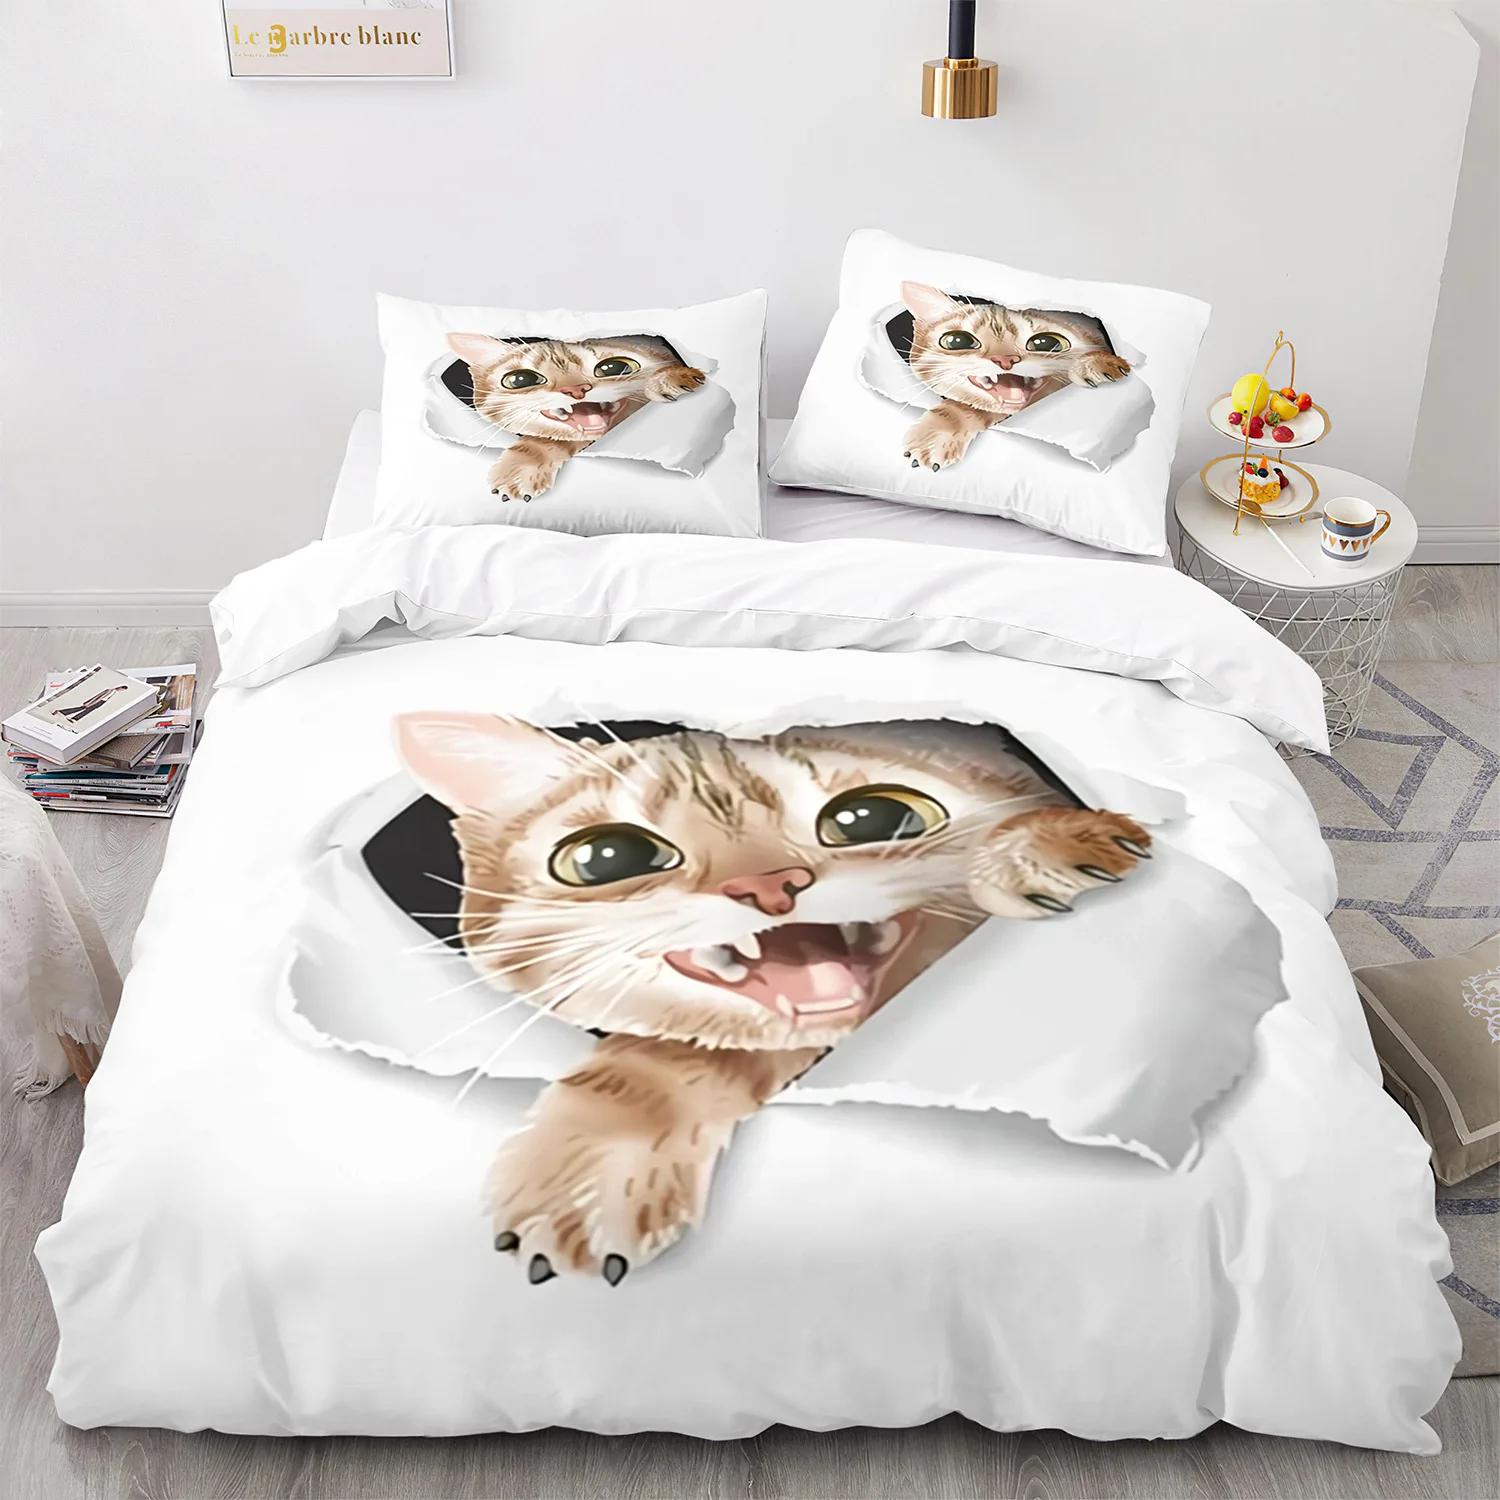 

Cute Cat Animal 3D Bedding Set Duvet Cover Pillowcases Comforter Linen Quilt Cover Room Decor Twin Queen King Size